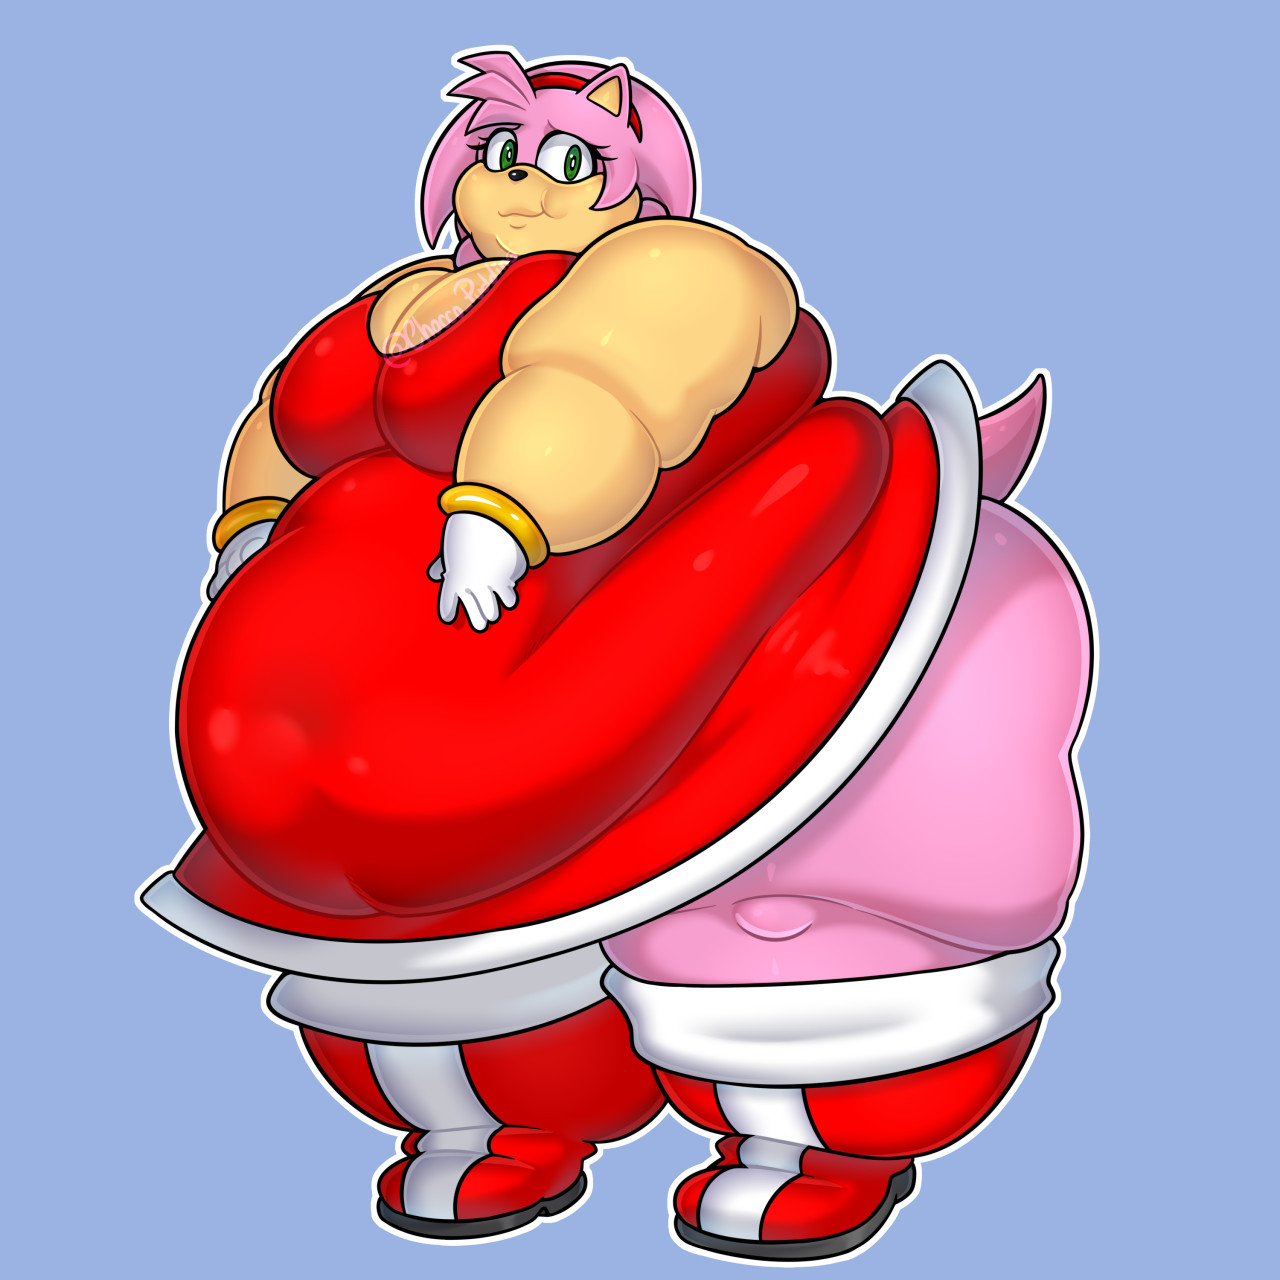 Amy rose fat